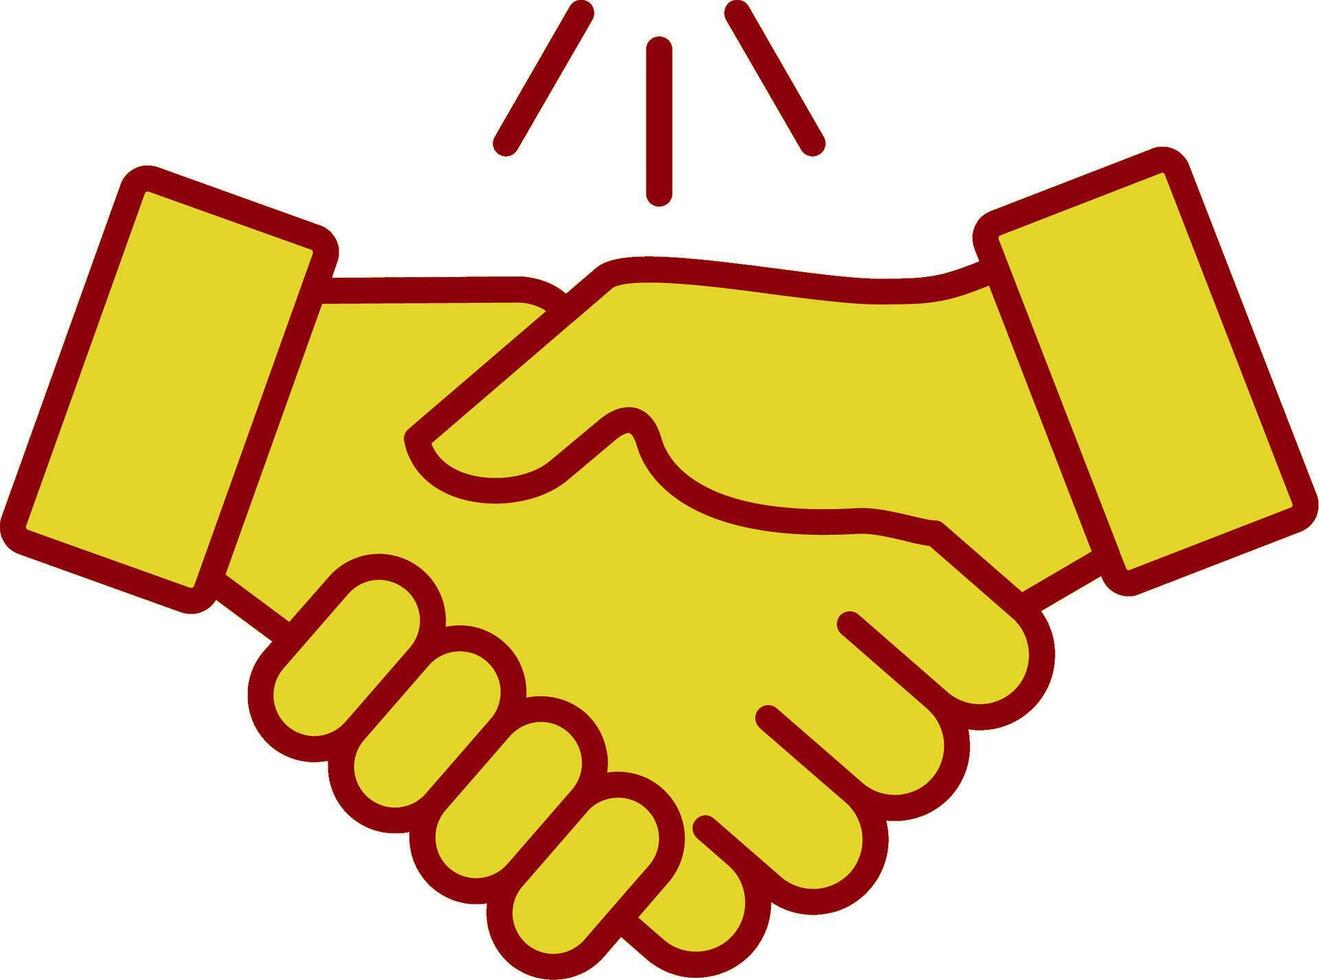 Handshake Line Two Color Icon vector